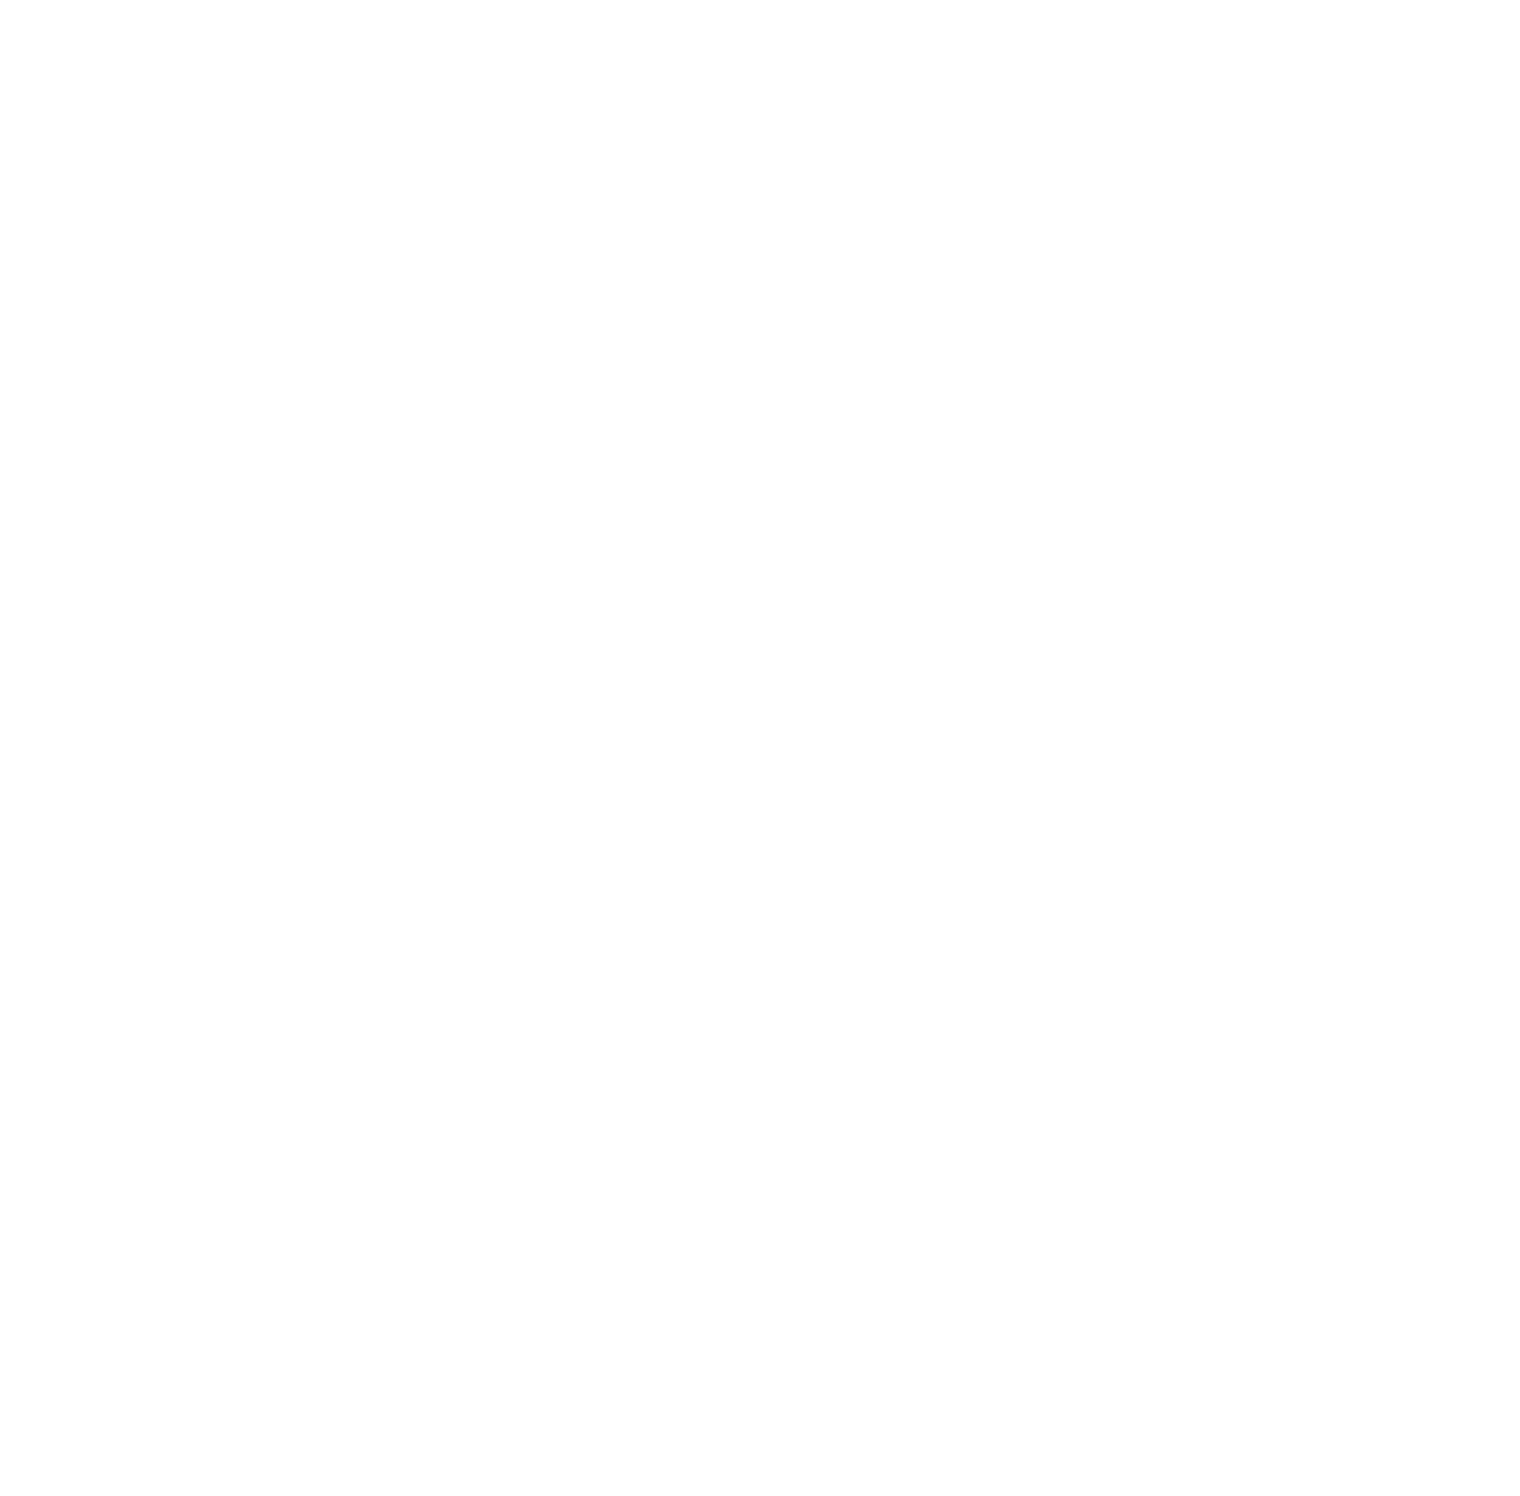 L'Occitane International logo pour fonds sombres (PNG transparent)